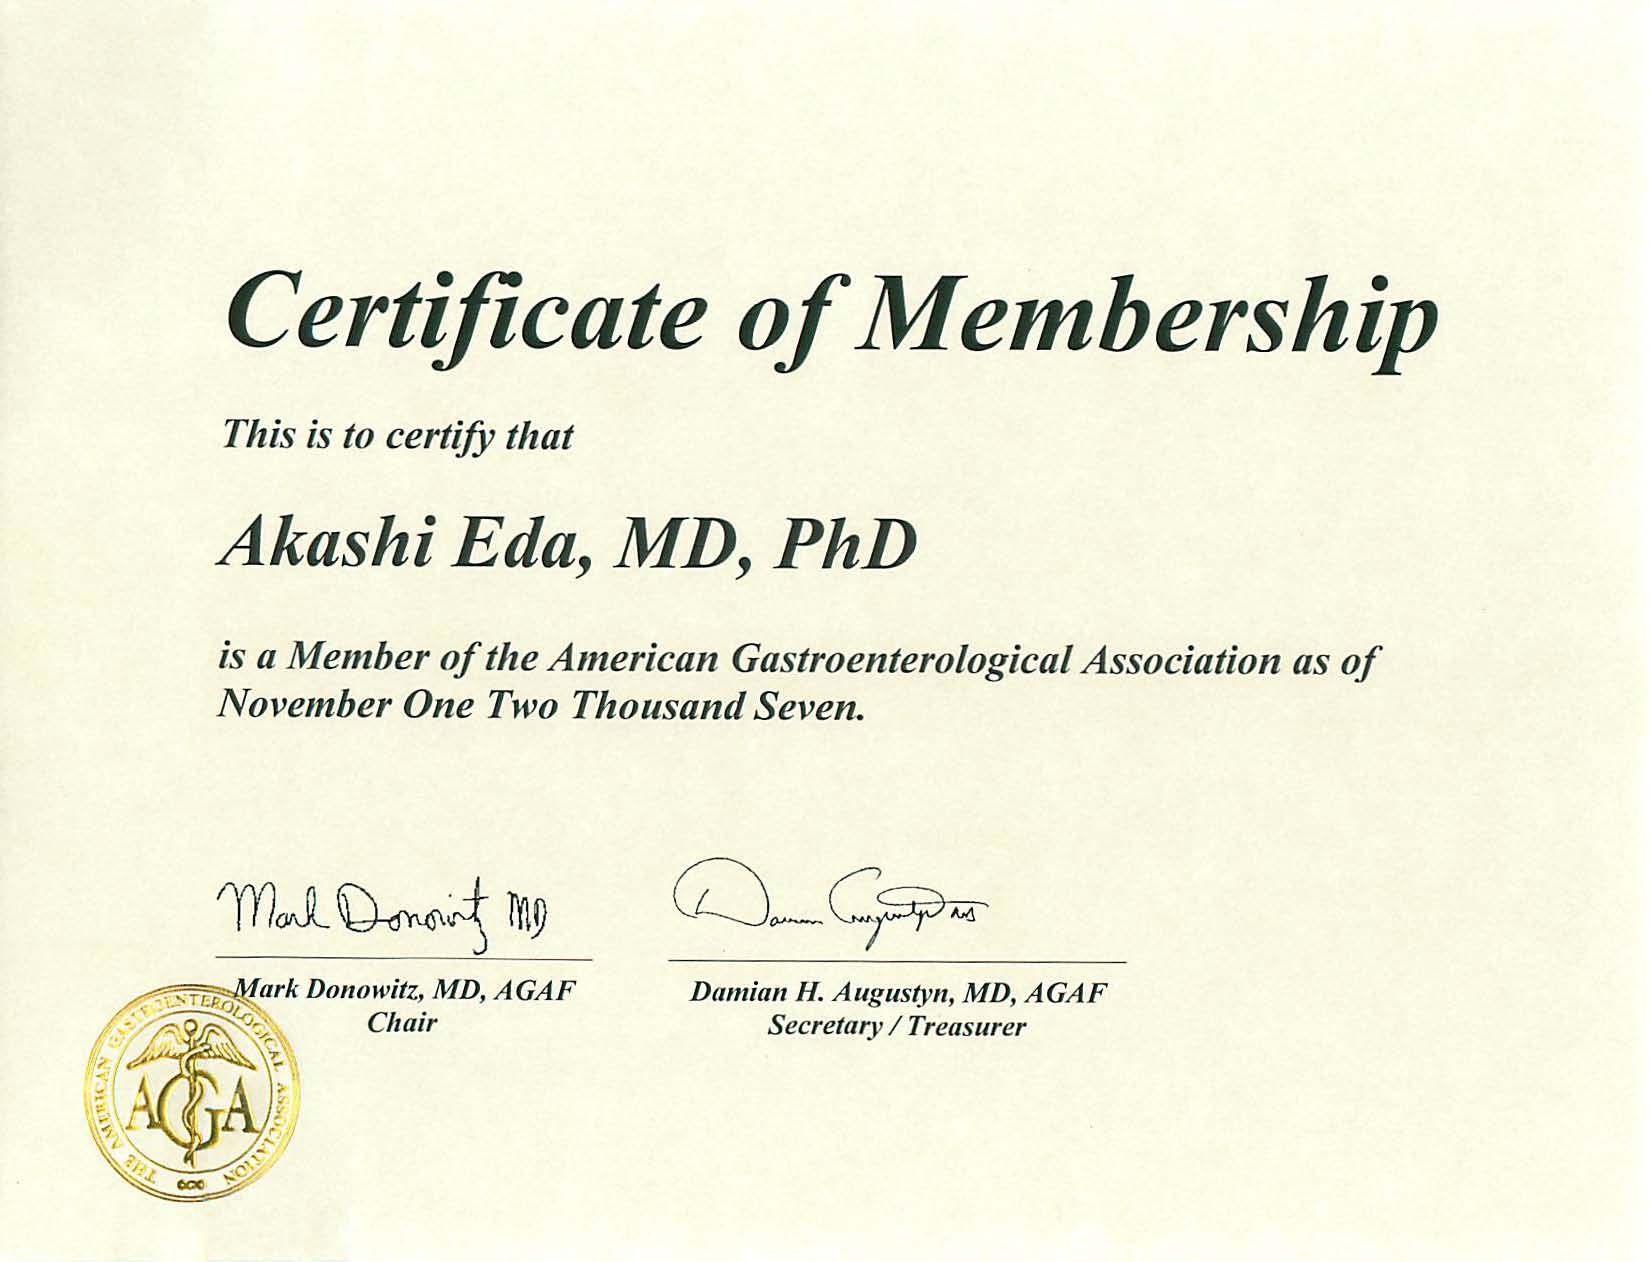 米国消化器病学会（AGA;American Gastroenterological Association）国際会員（　International Member）